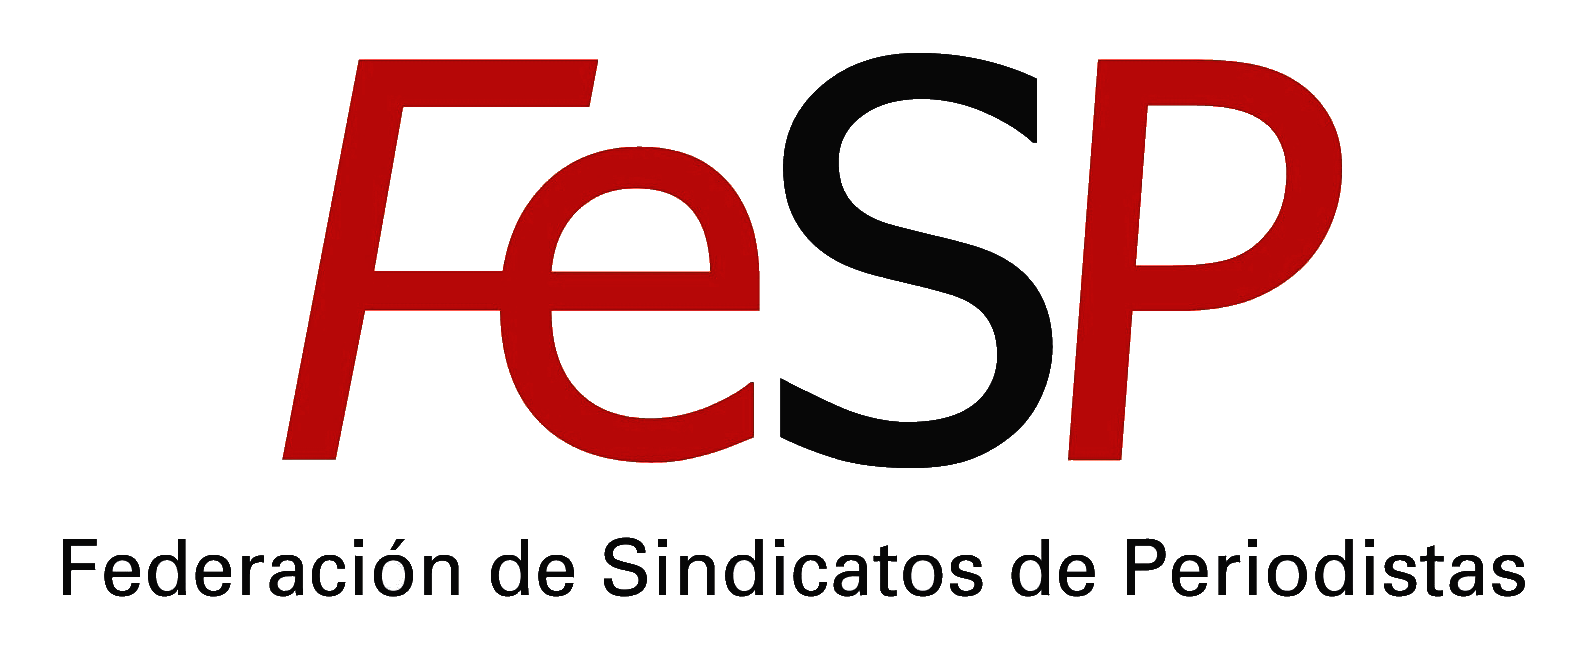 LogoFeSP 2010ok